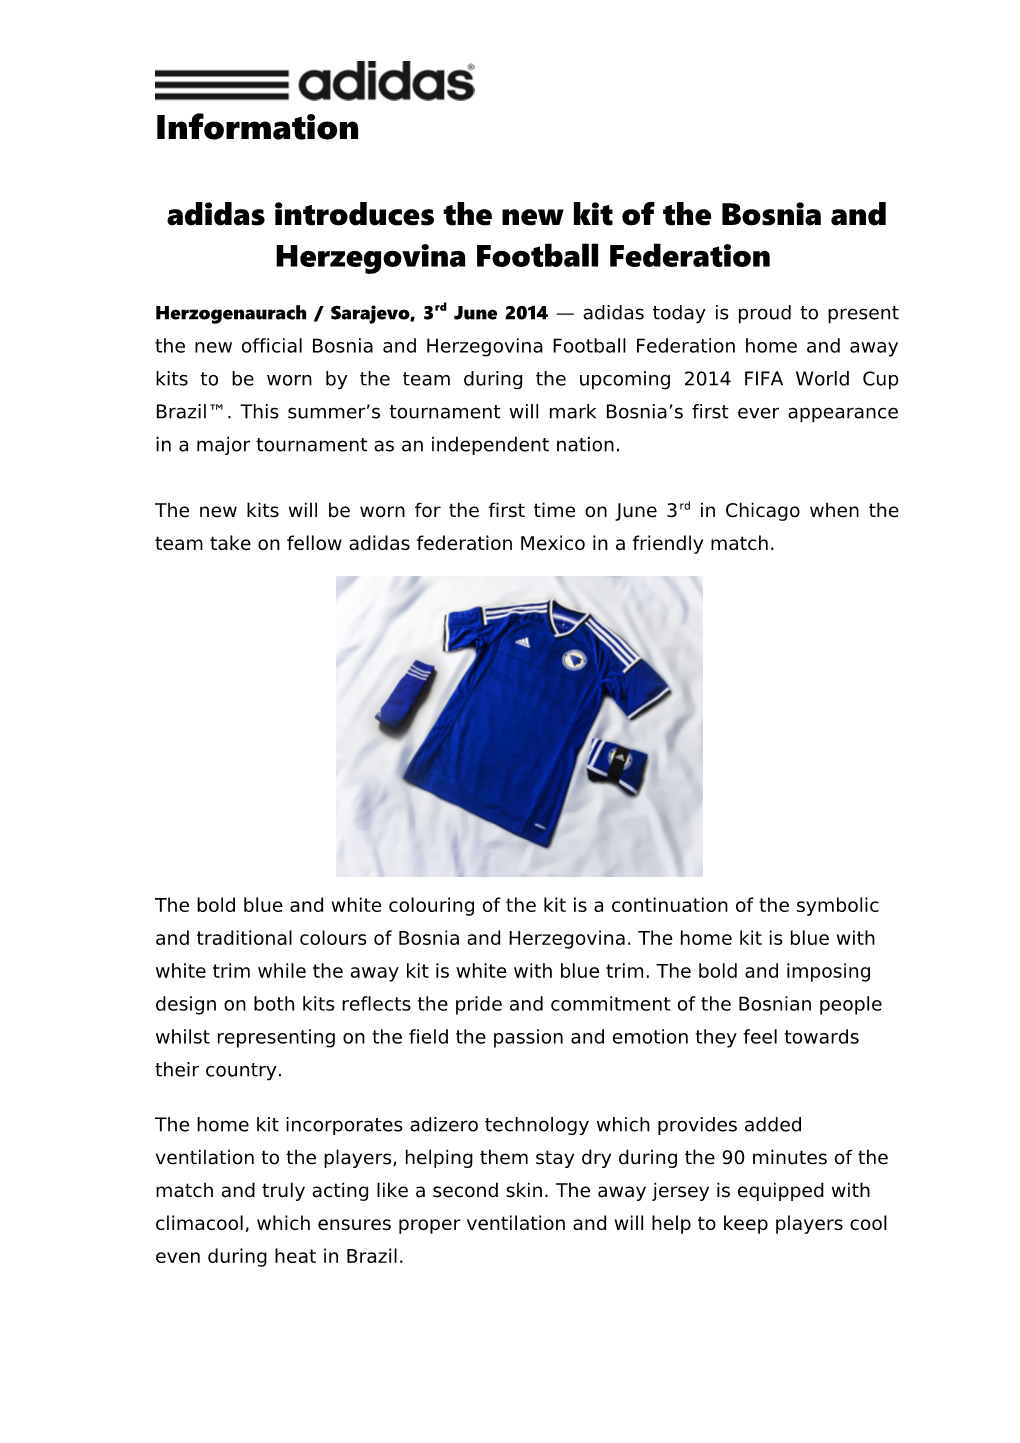 Adidas Introduces the New Kit of the Bosnia and Herzegovina Football Federation